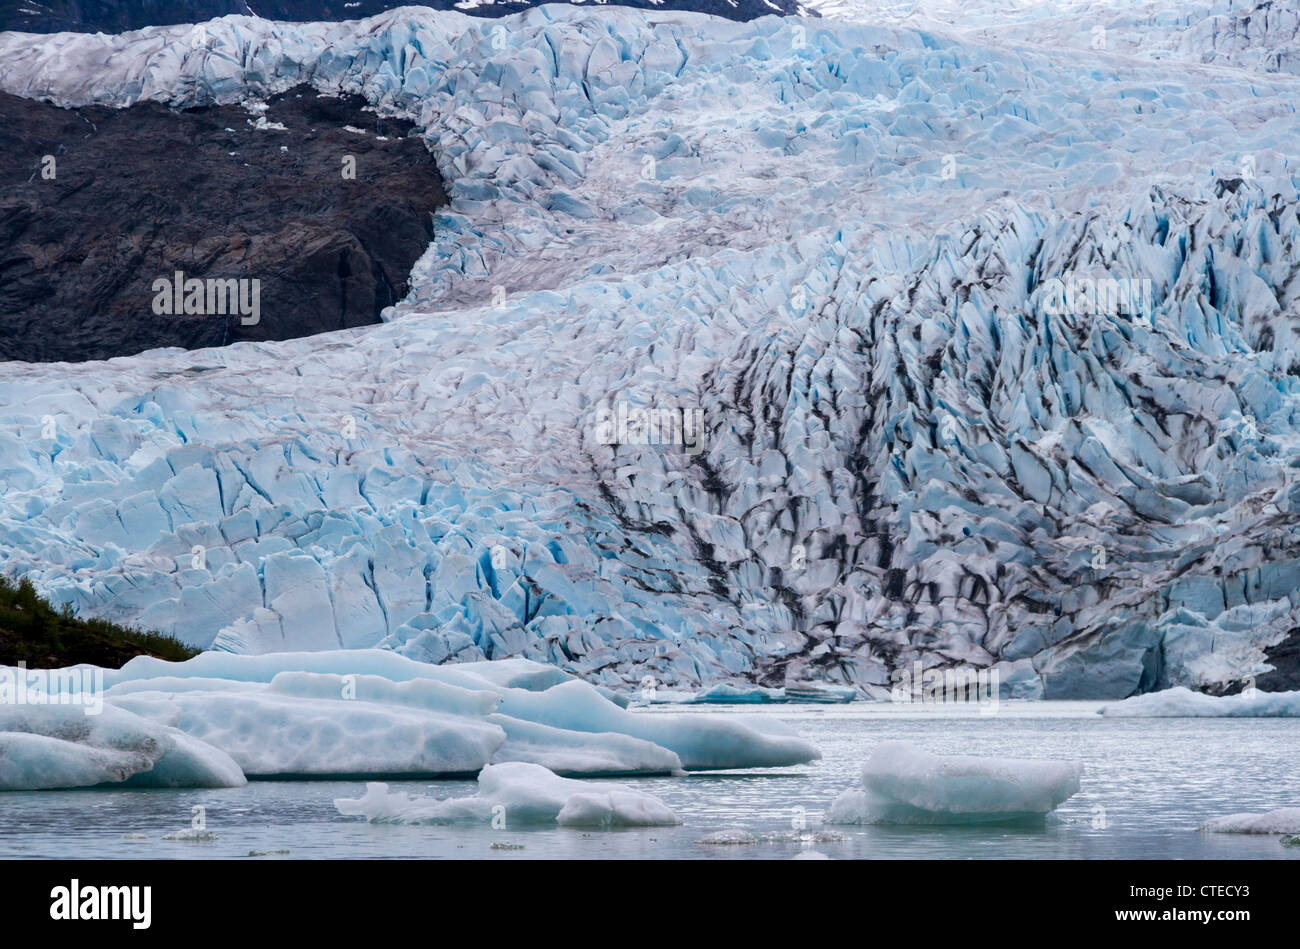 Mendenhall Glacier in Juneau Icefield near Juneau, Alaska. Stock Photo